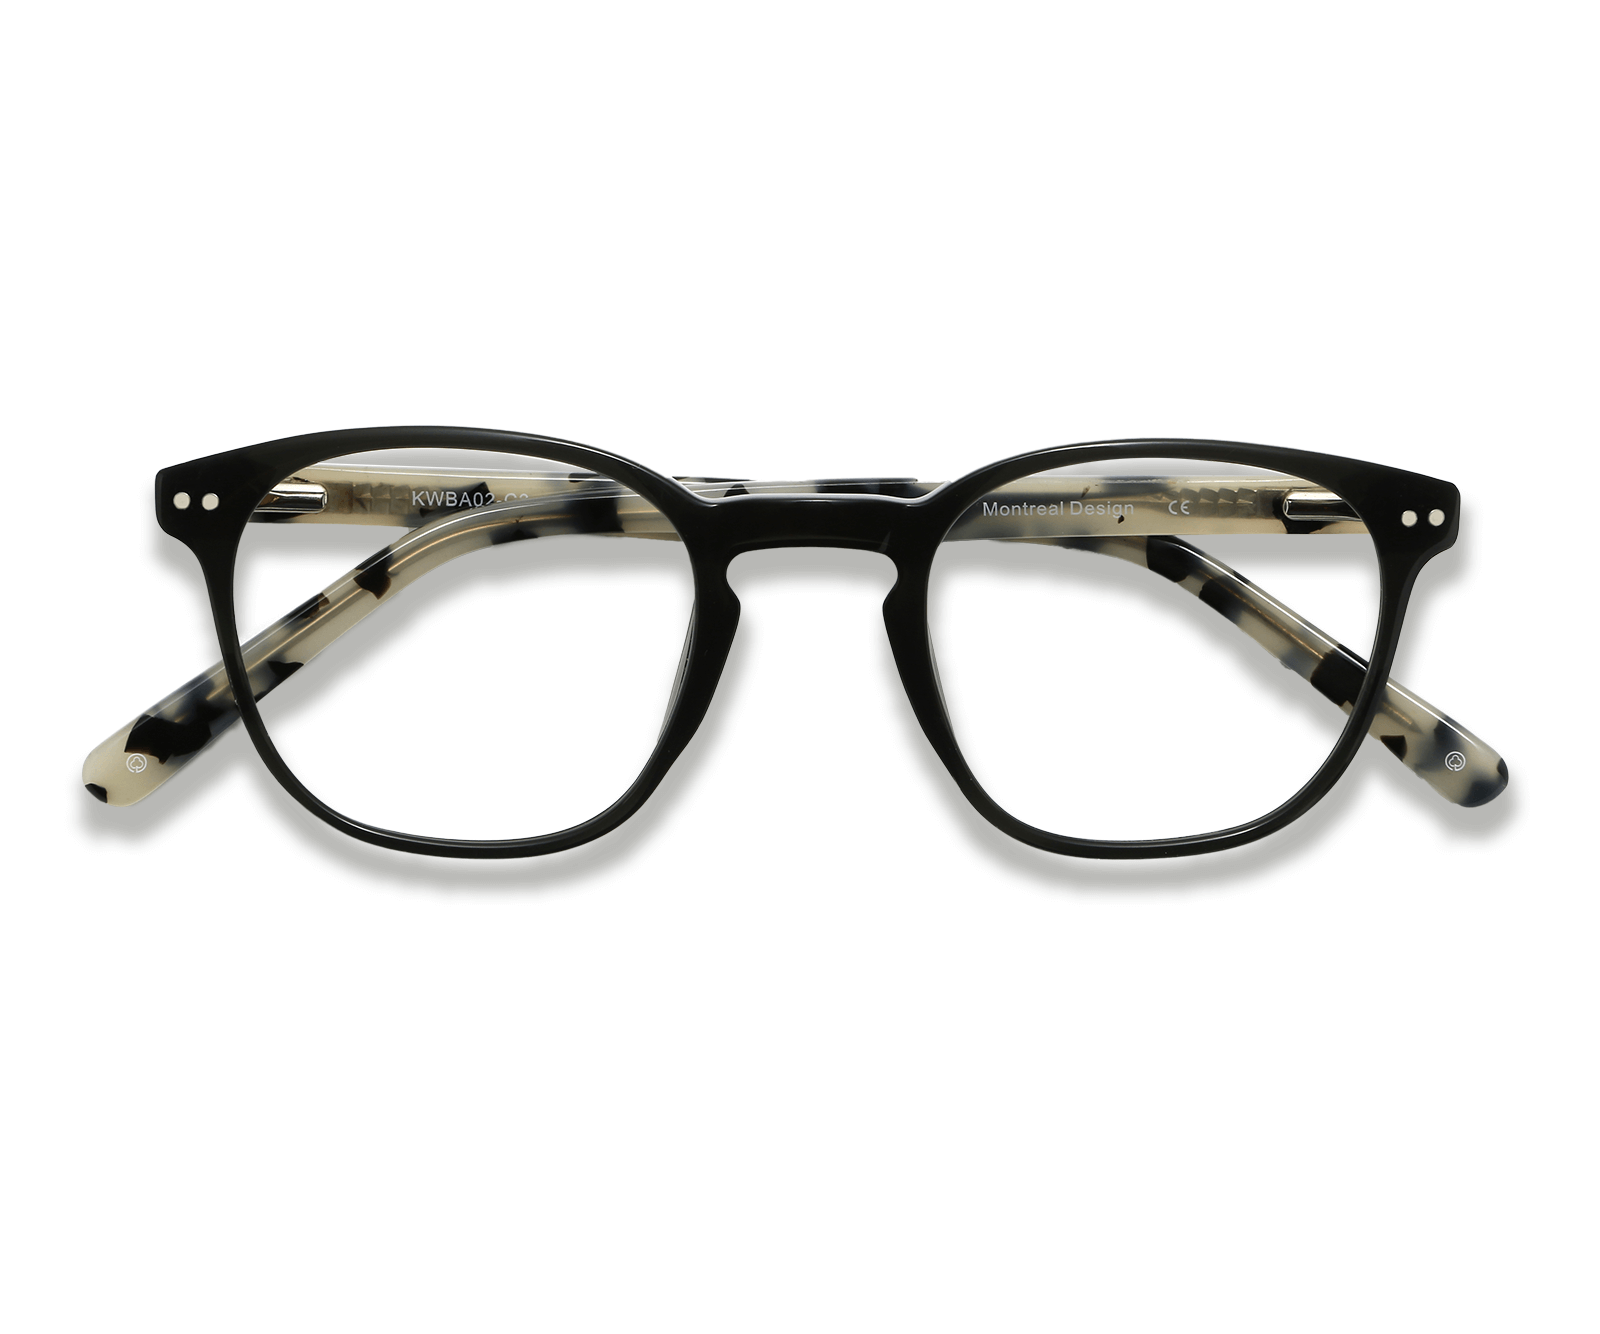 Kraywoods Hazel, Retro Square Sunglasses made from Walnut Wood with Gradient Polarized Lenses, 100% UV Protection